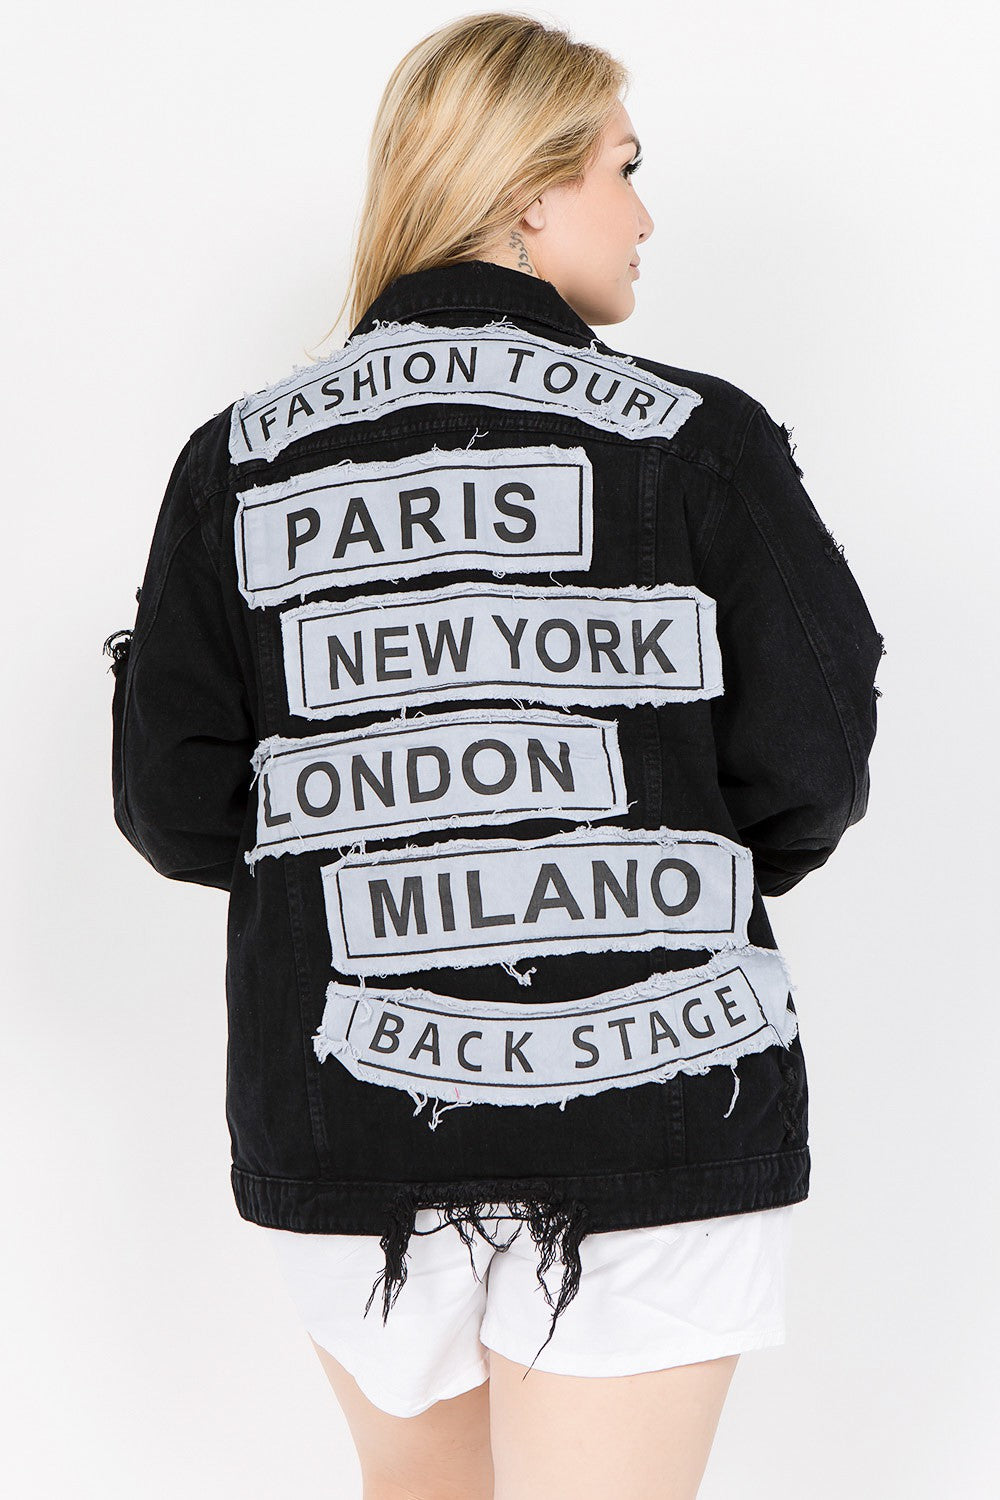 Women's Black Denim Distressed Fashion Tour Jacket